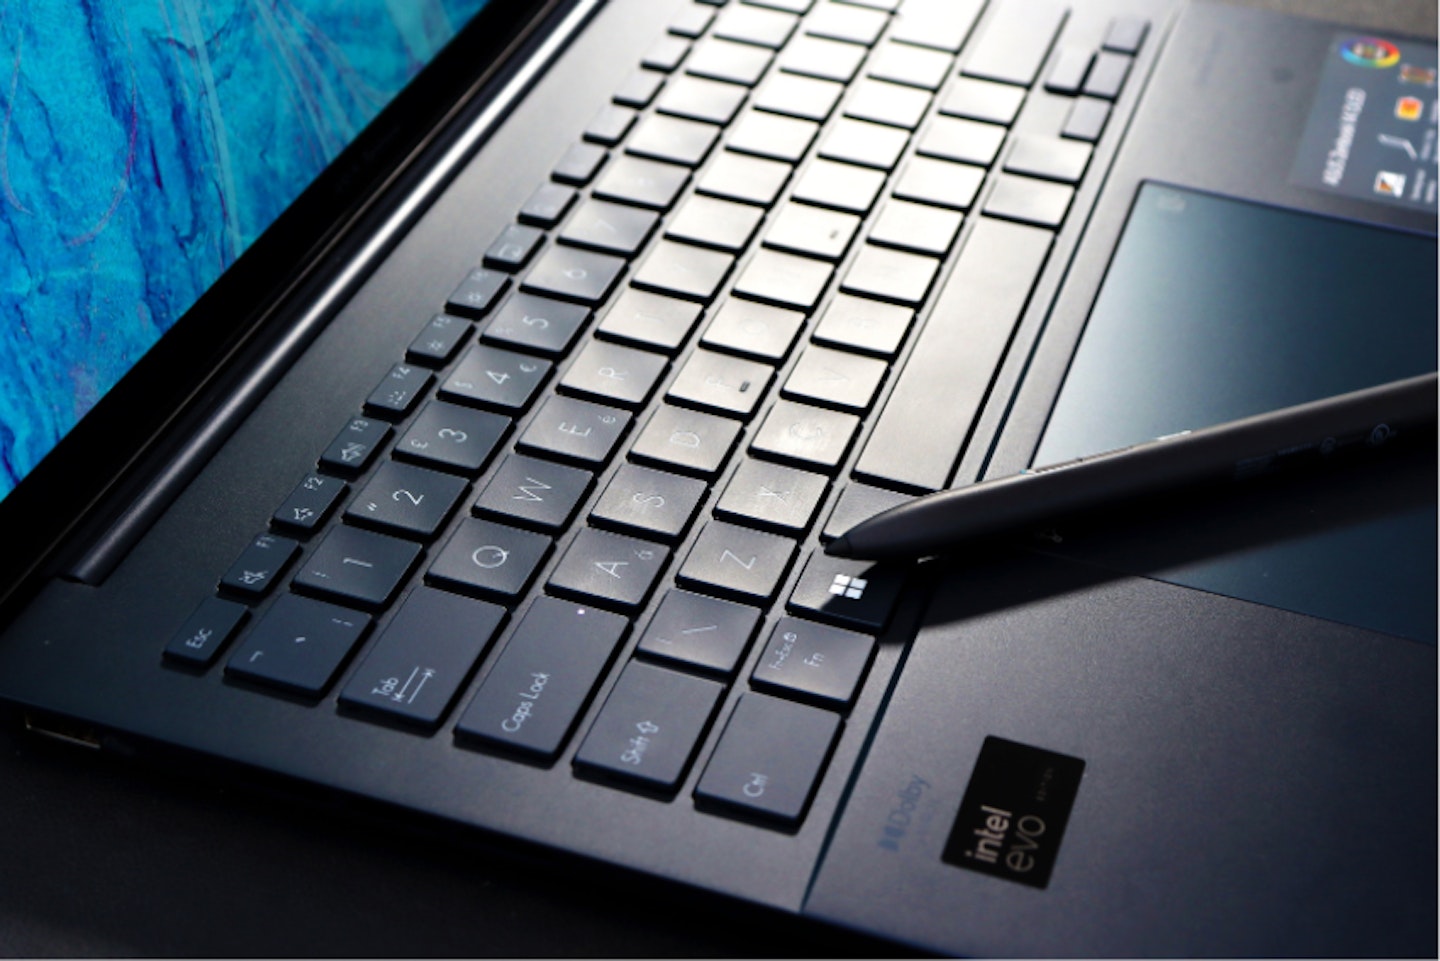 A laptop with a stylus pen